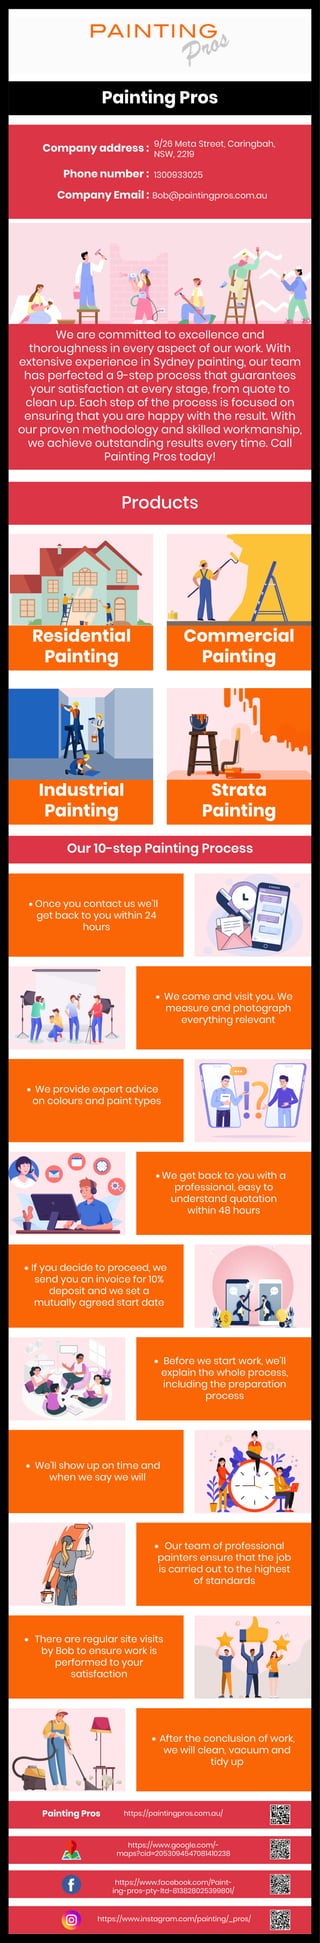 Painting Pros.pdf